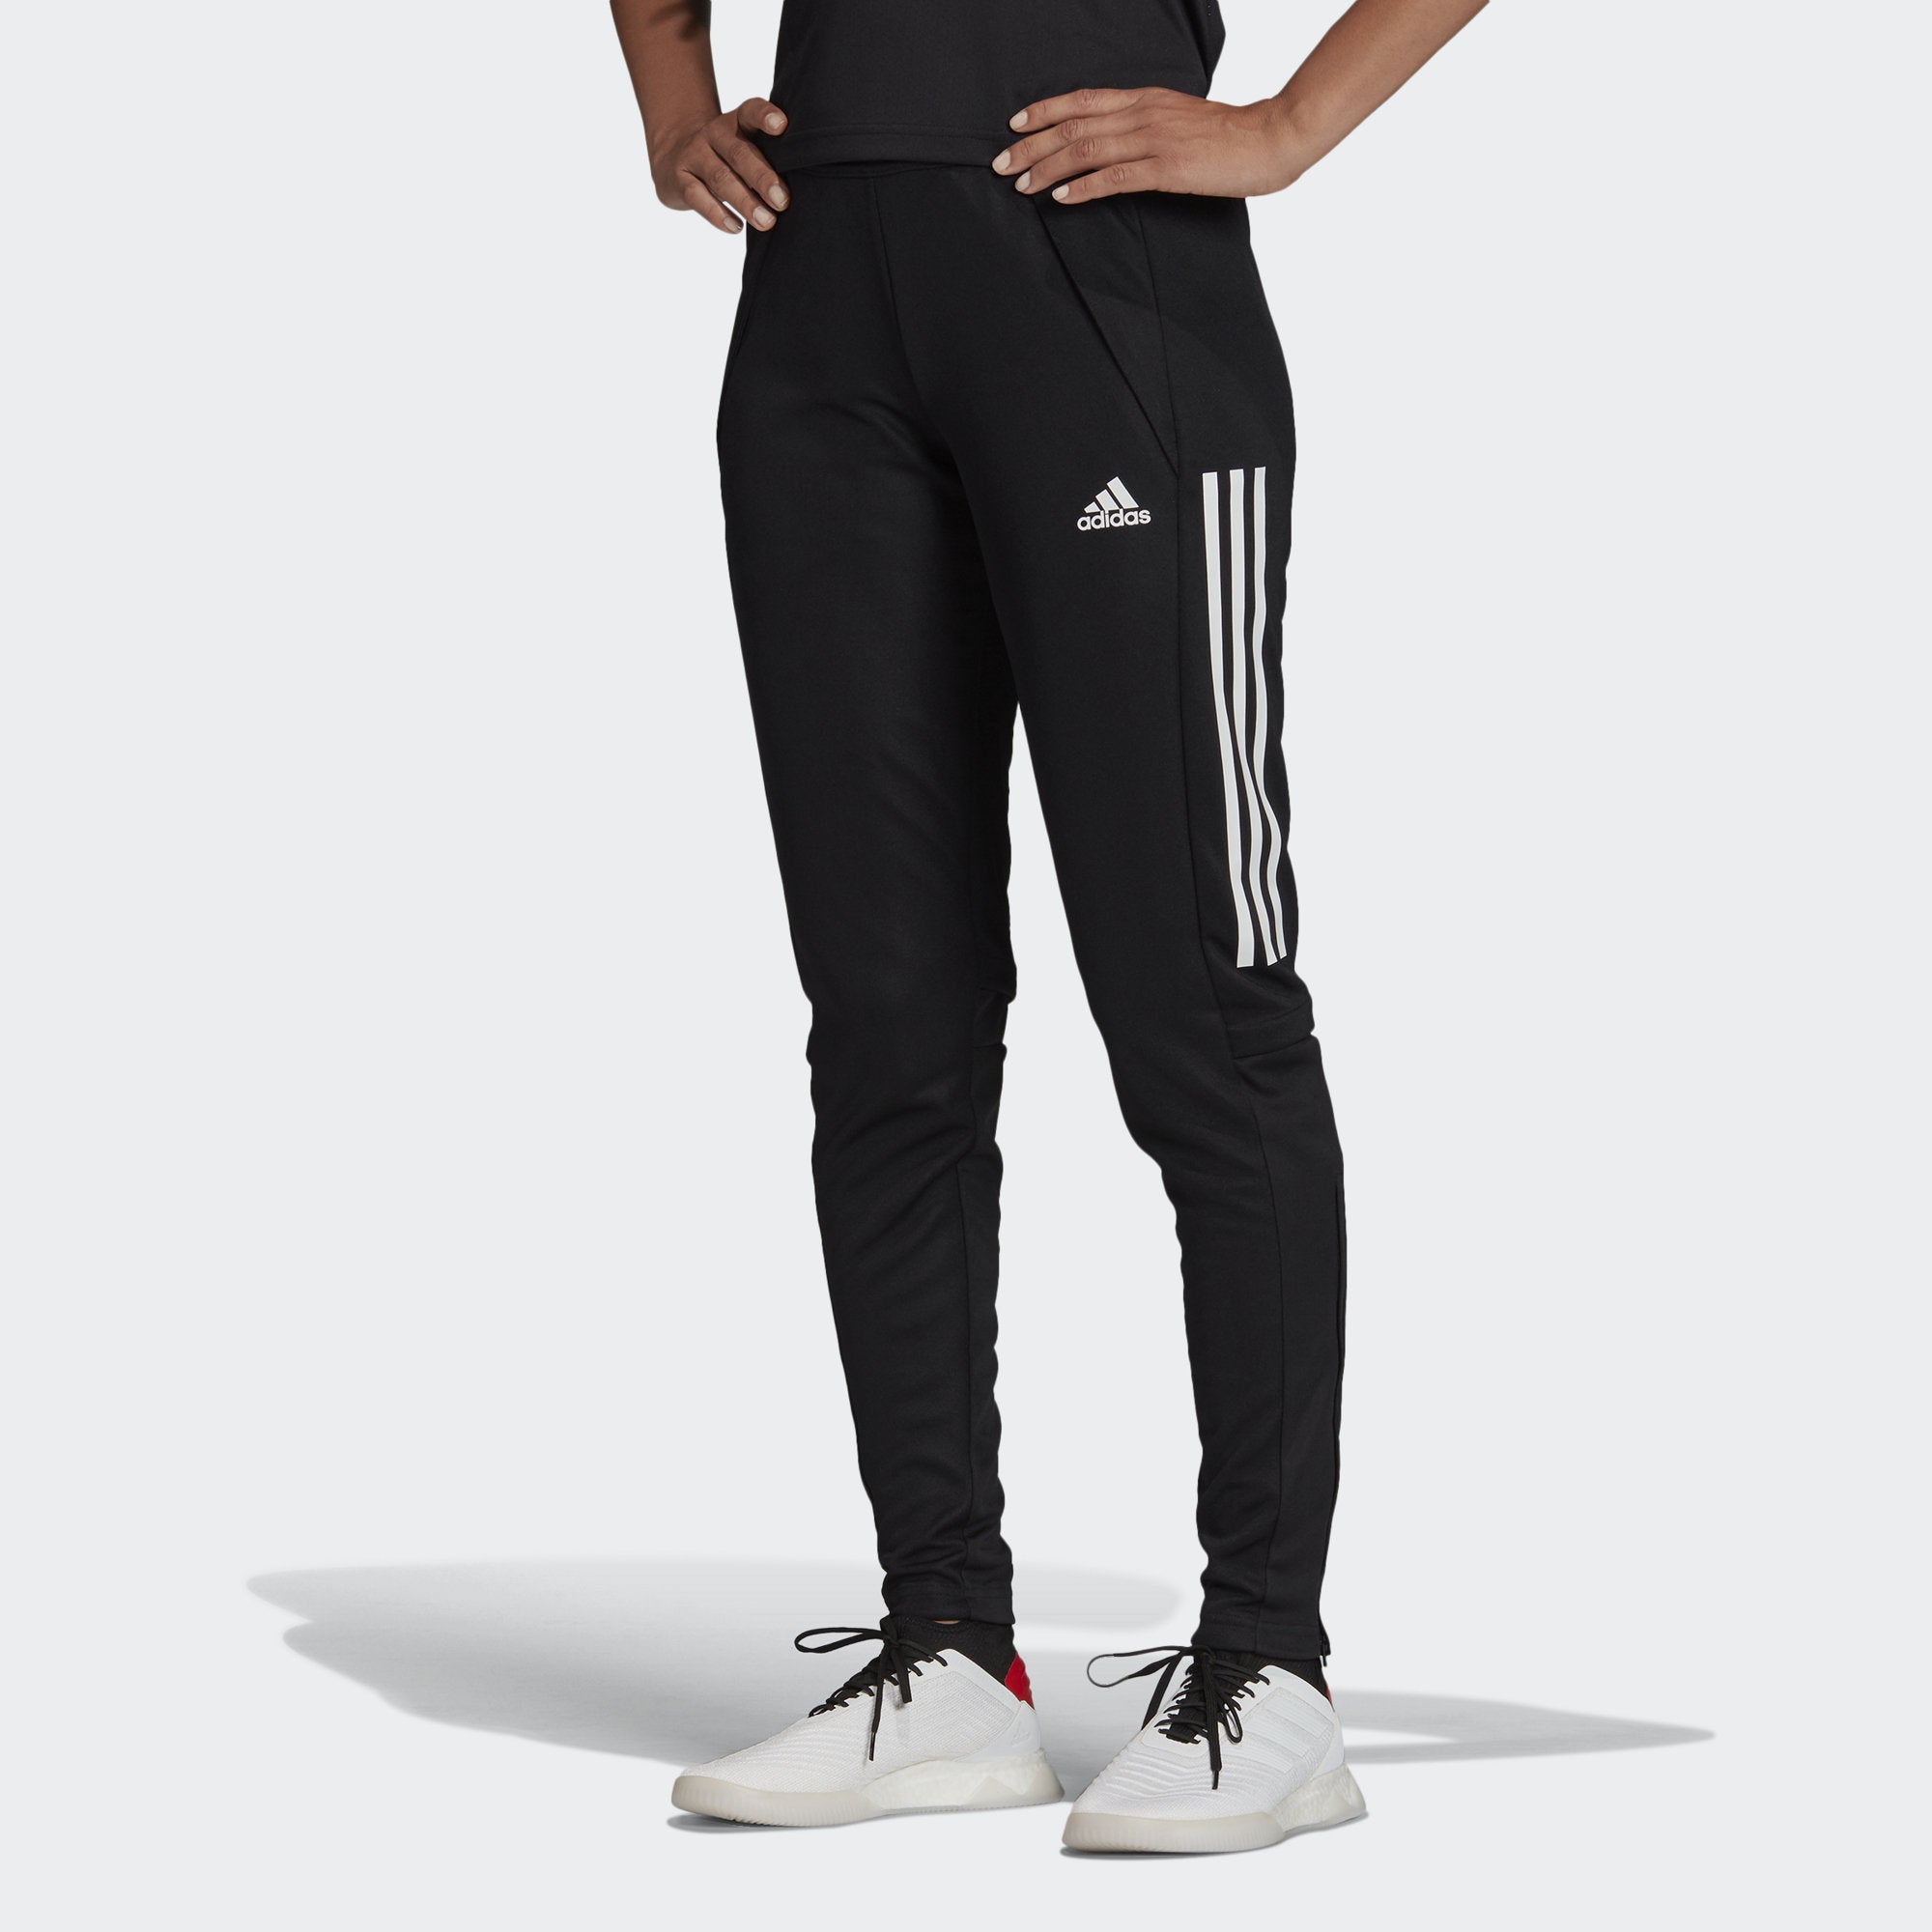 adidas Football Tiro track pants in black, ASOS